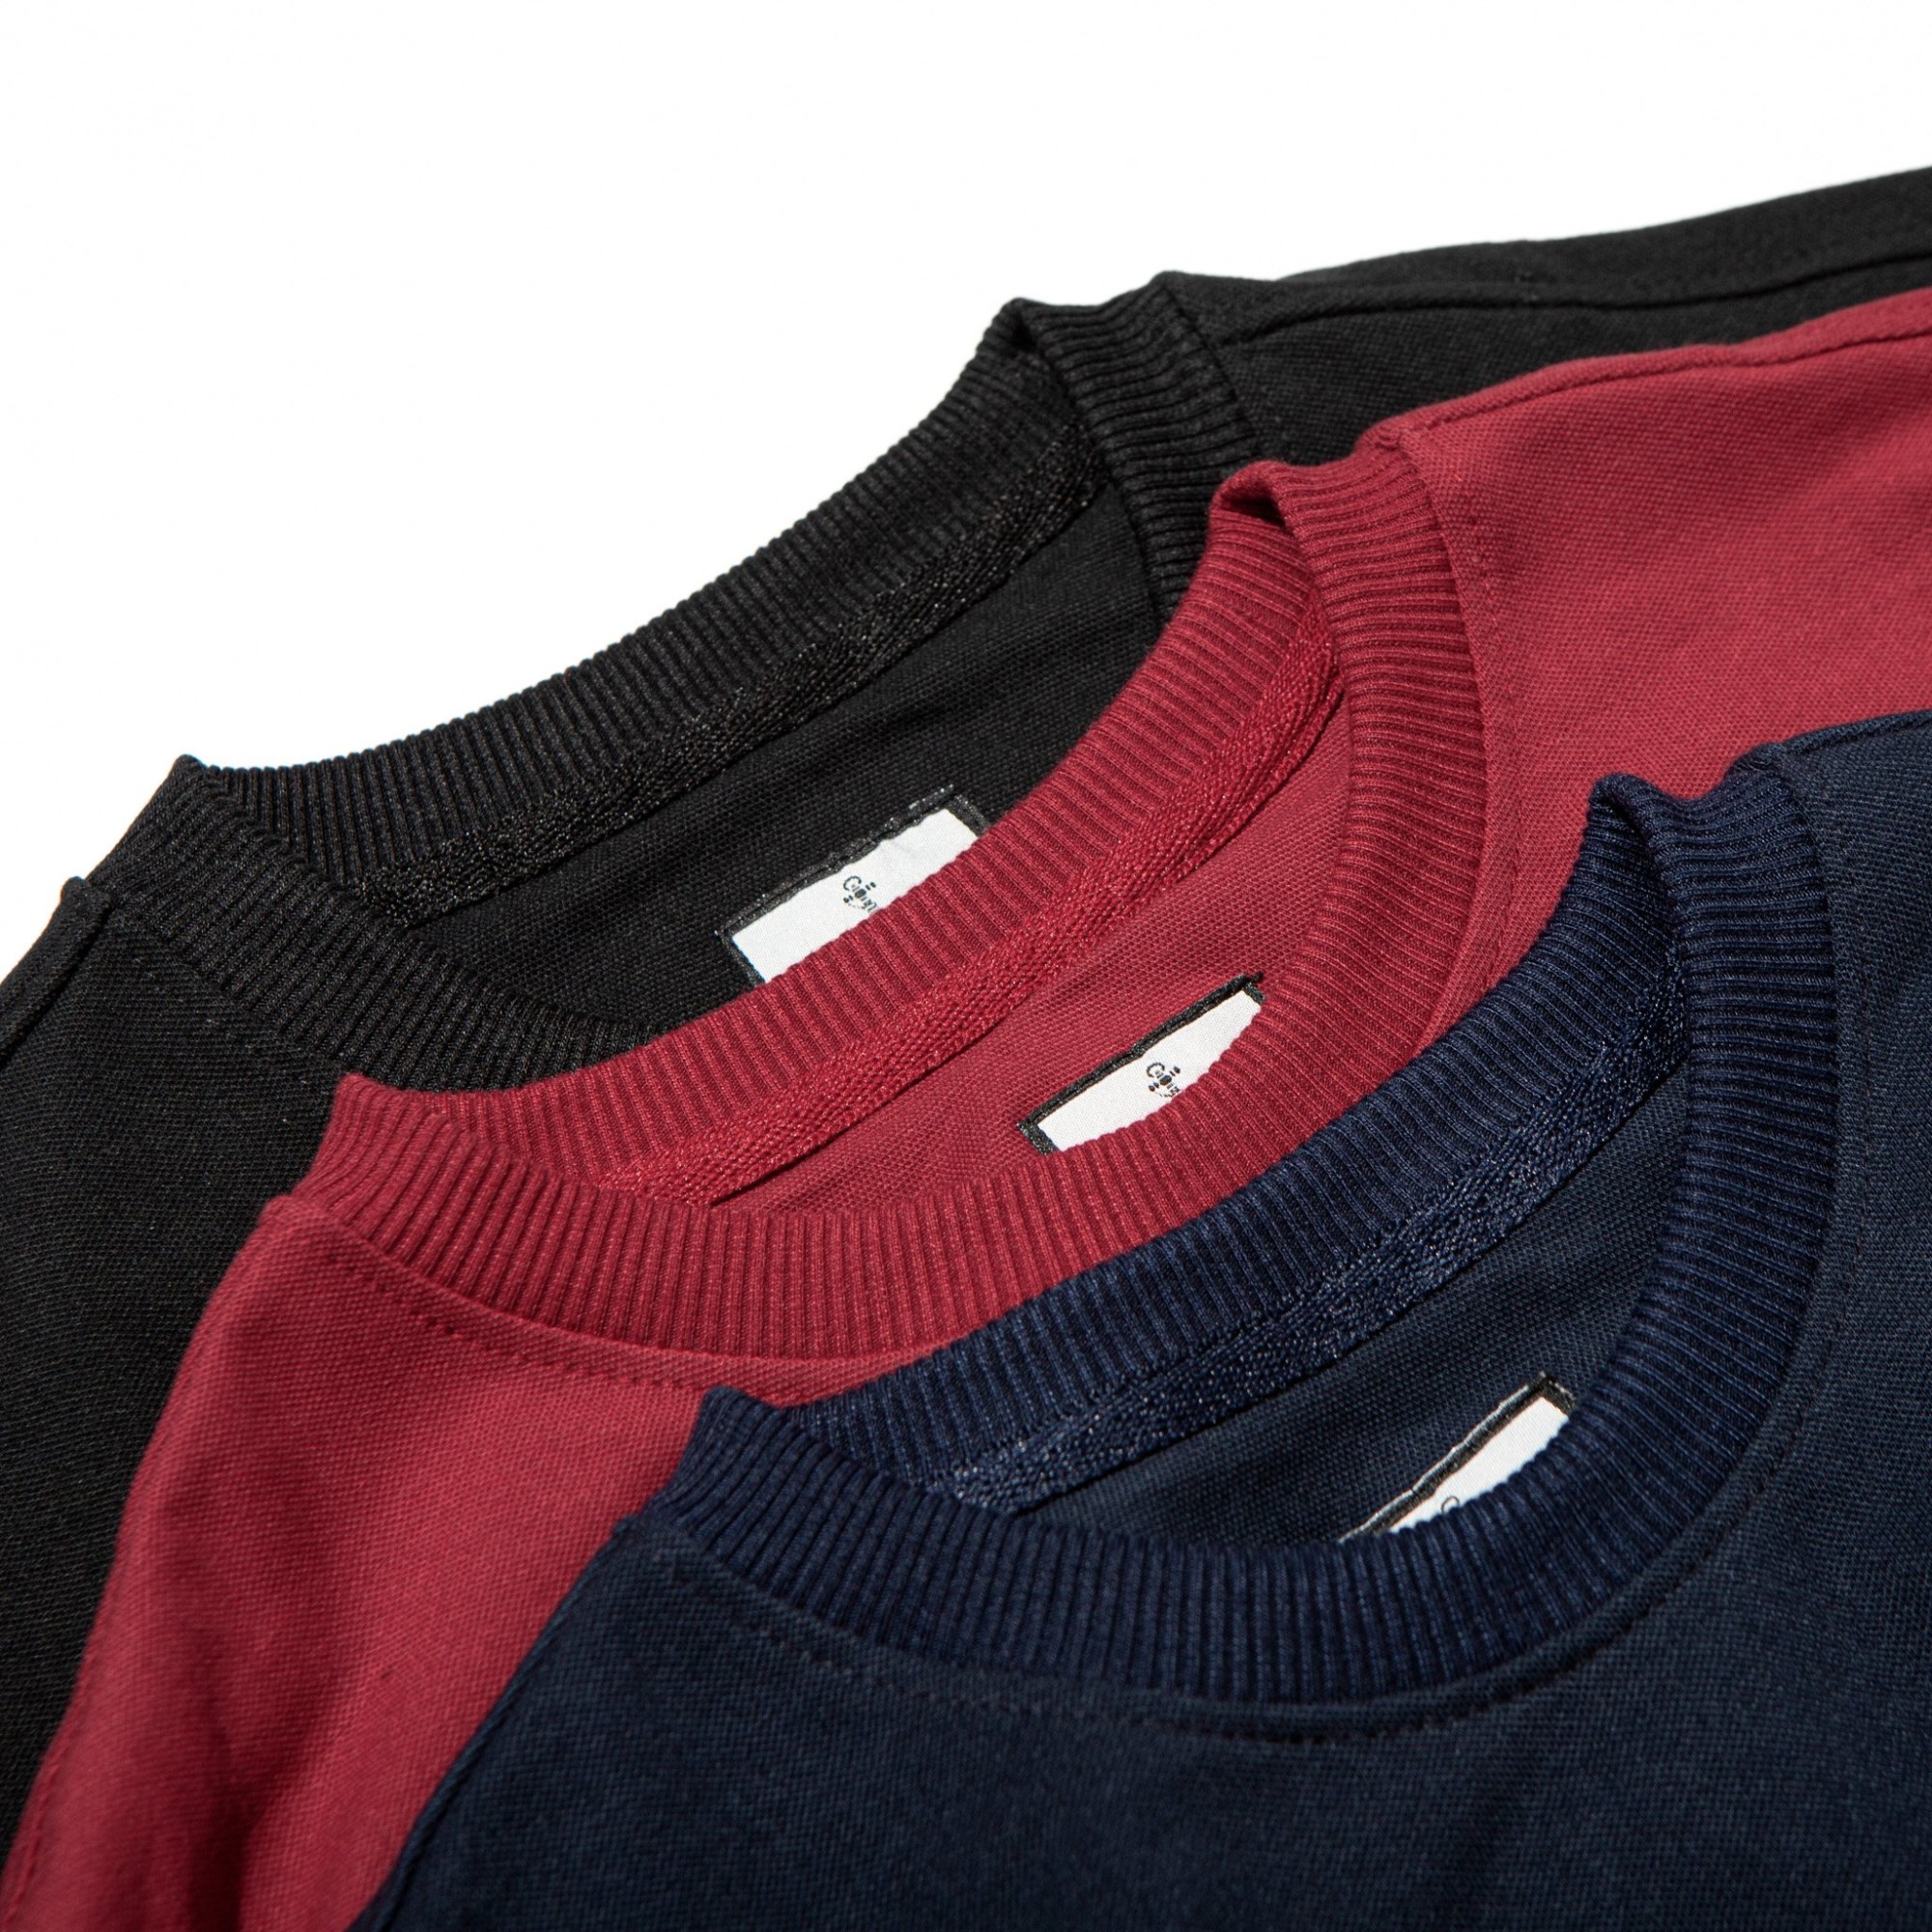 Áo sweater không túi Old Sailor - O.S.L SWEATERS - RED - SWDO884391- đỏ - big size upto 5XL